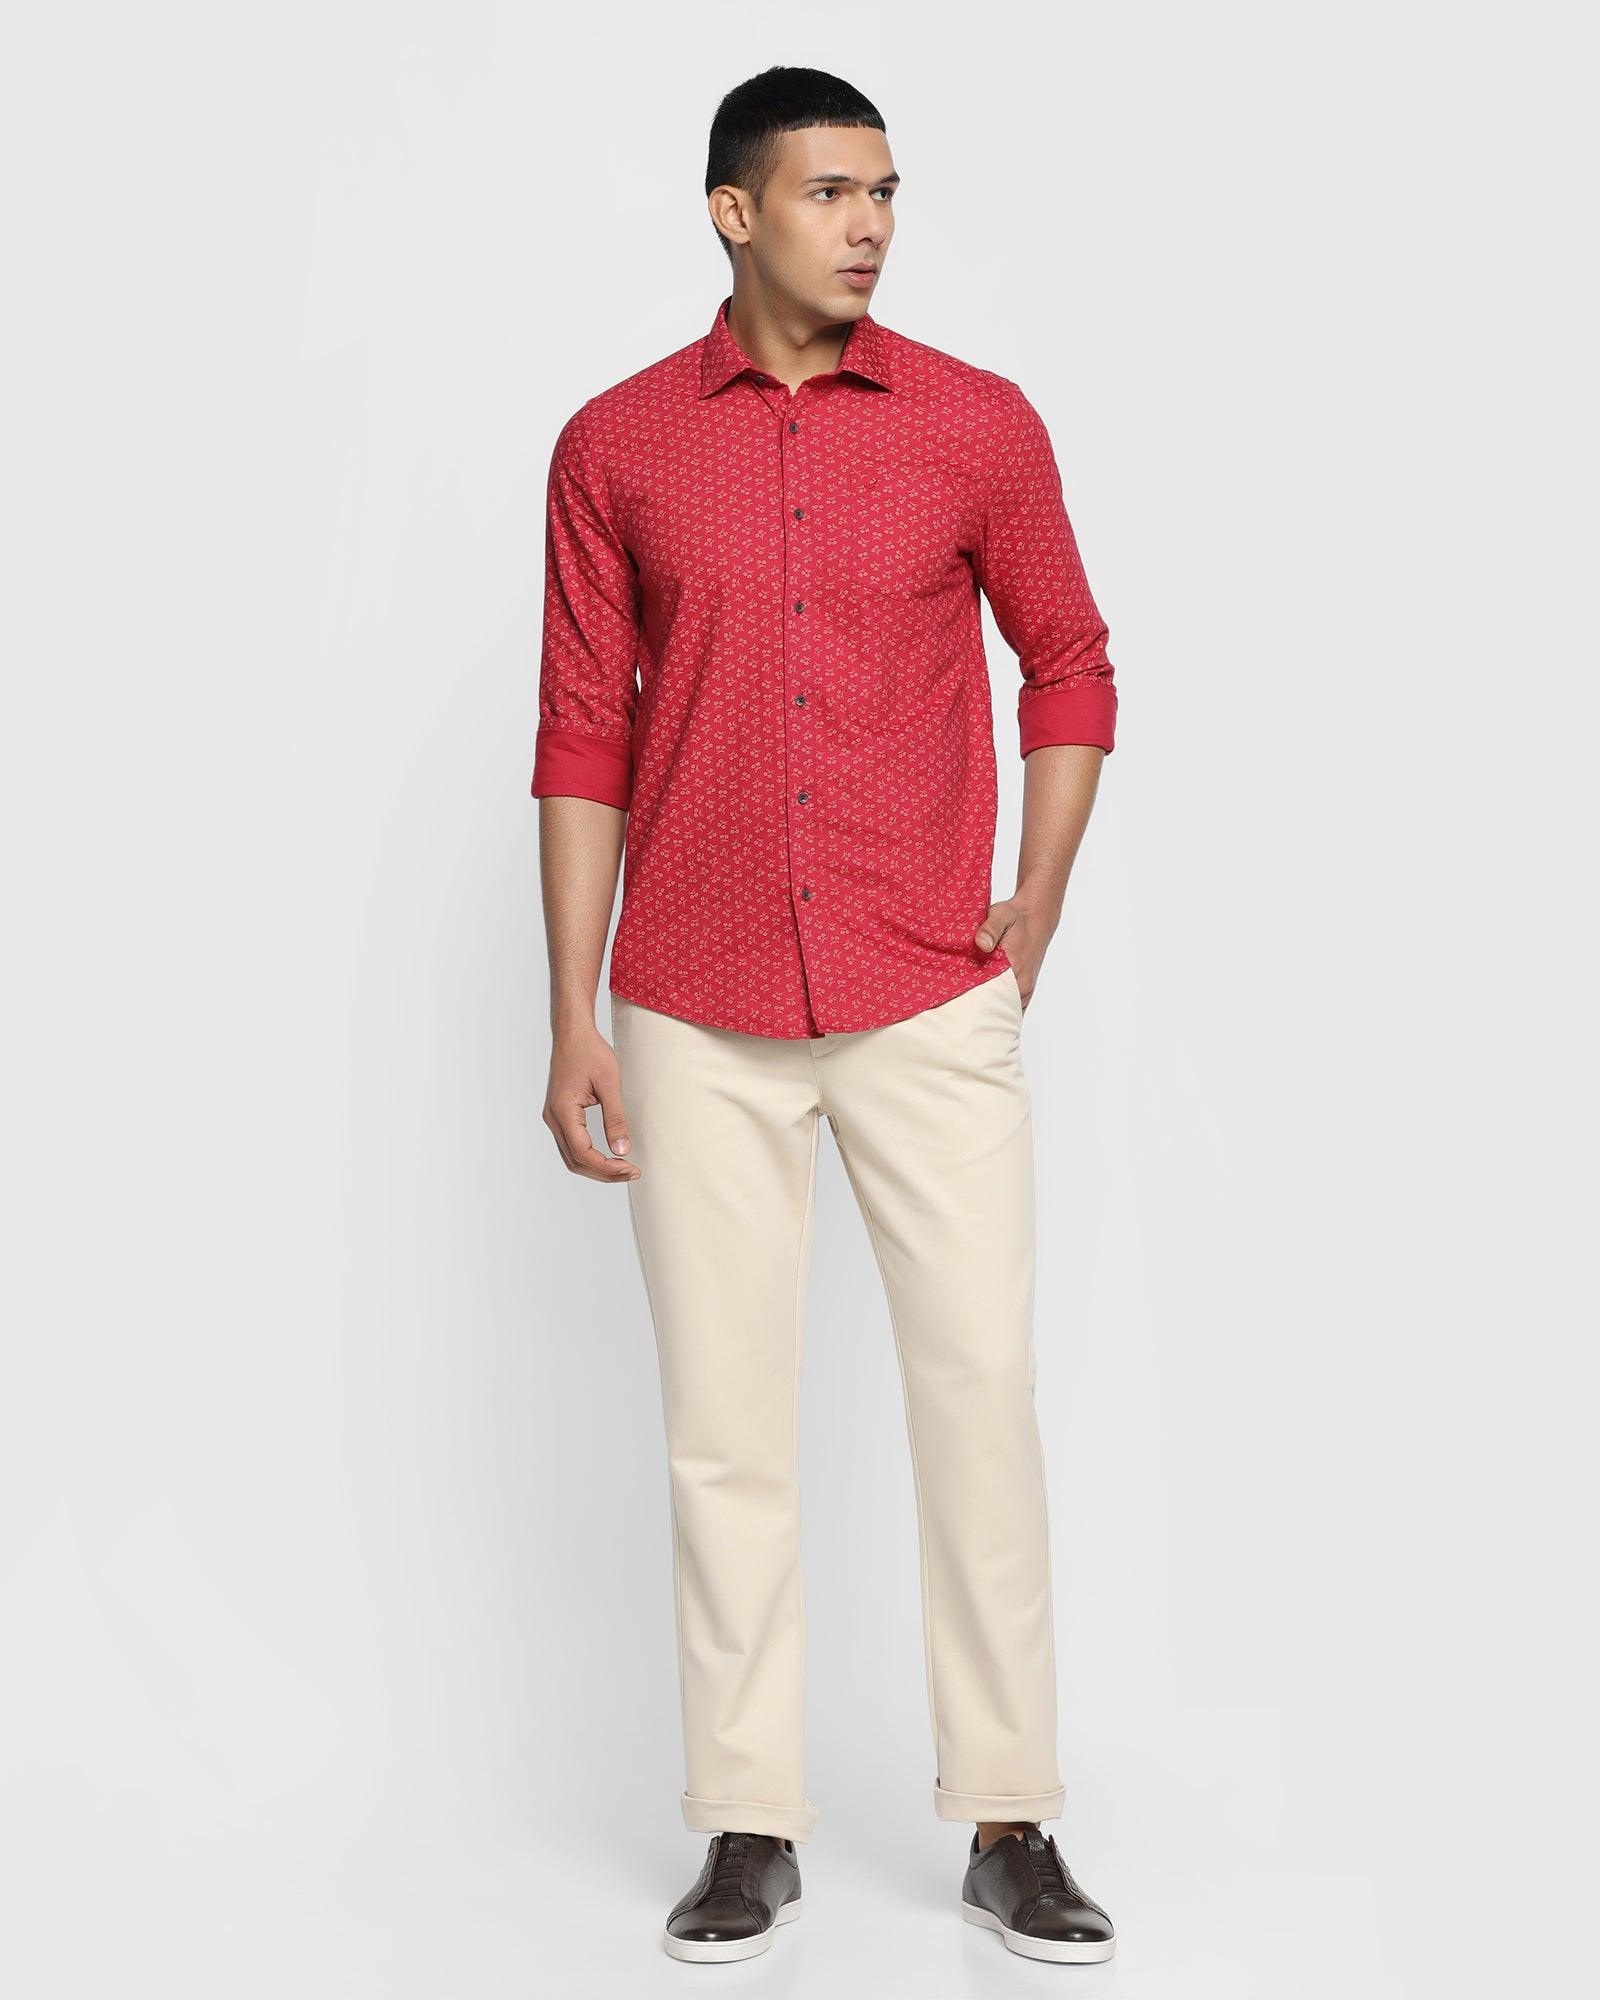 Casual Red Printed Shirt - Ken